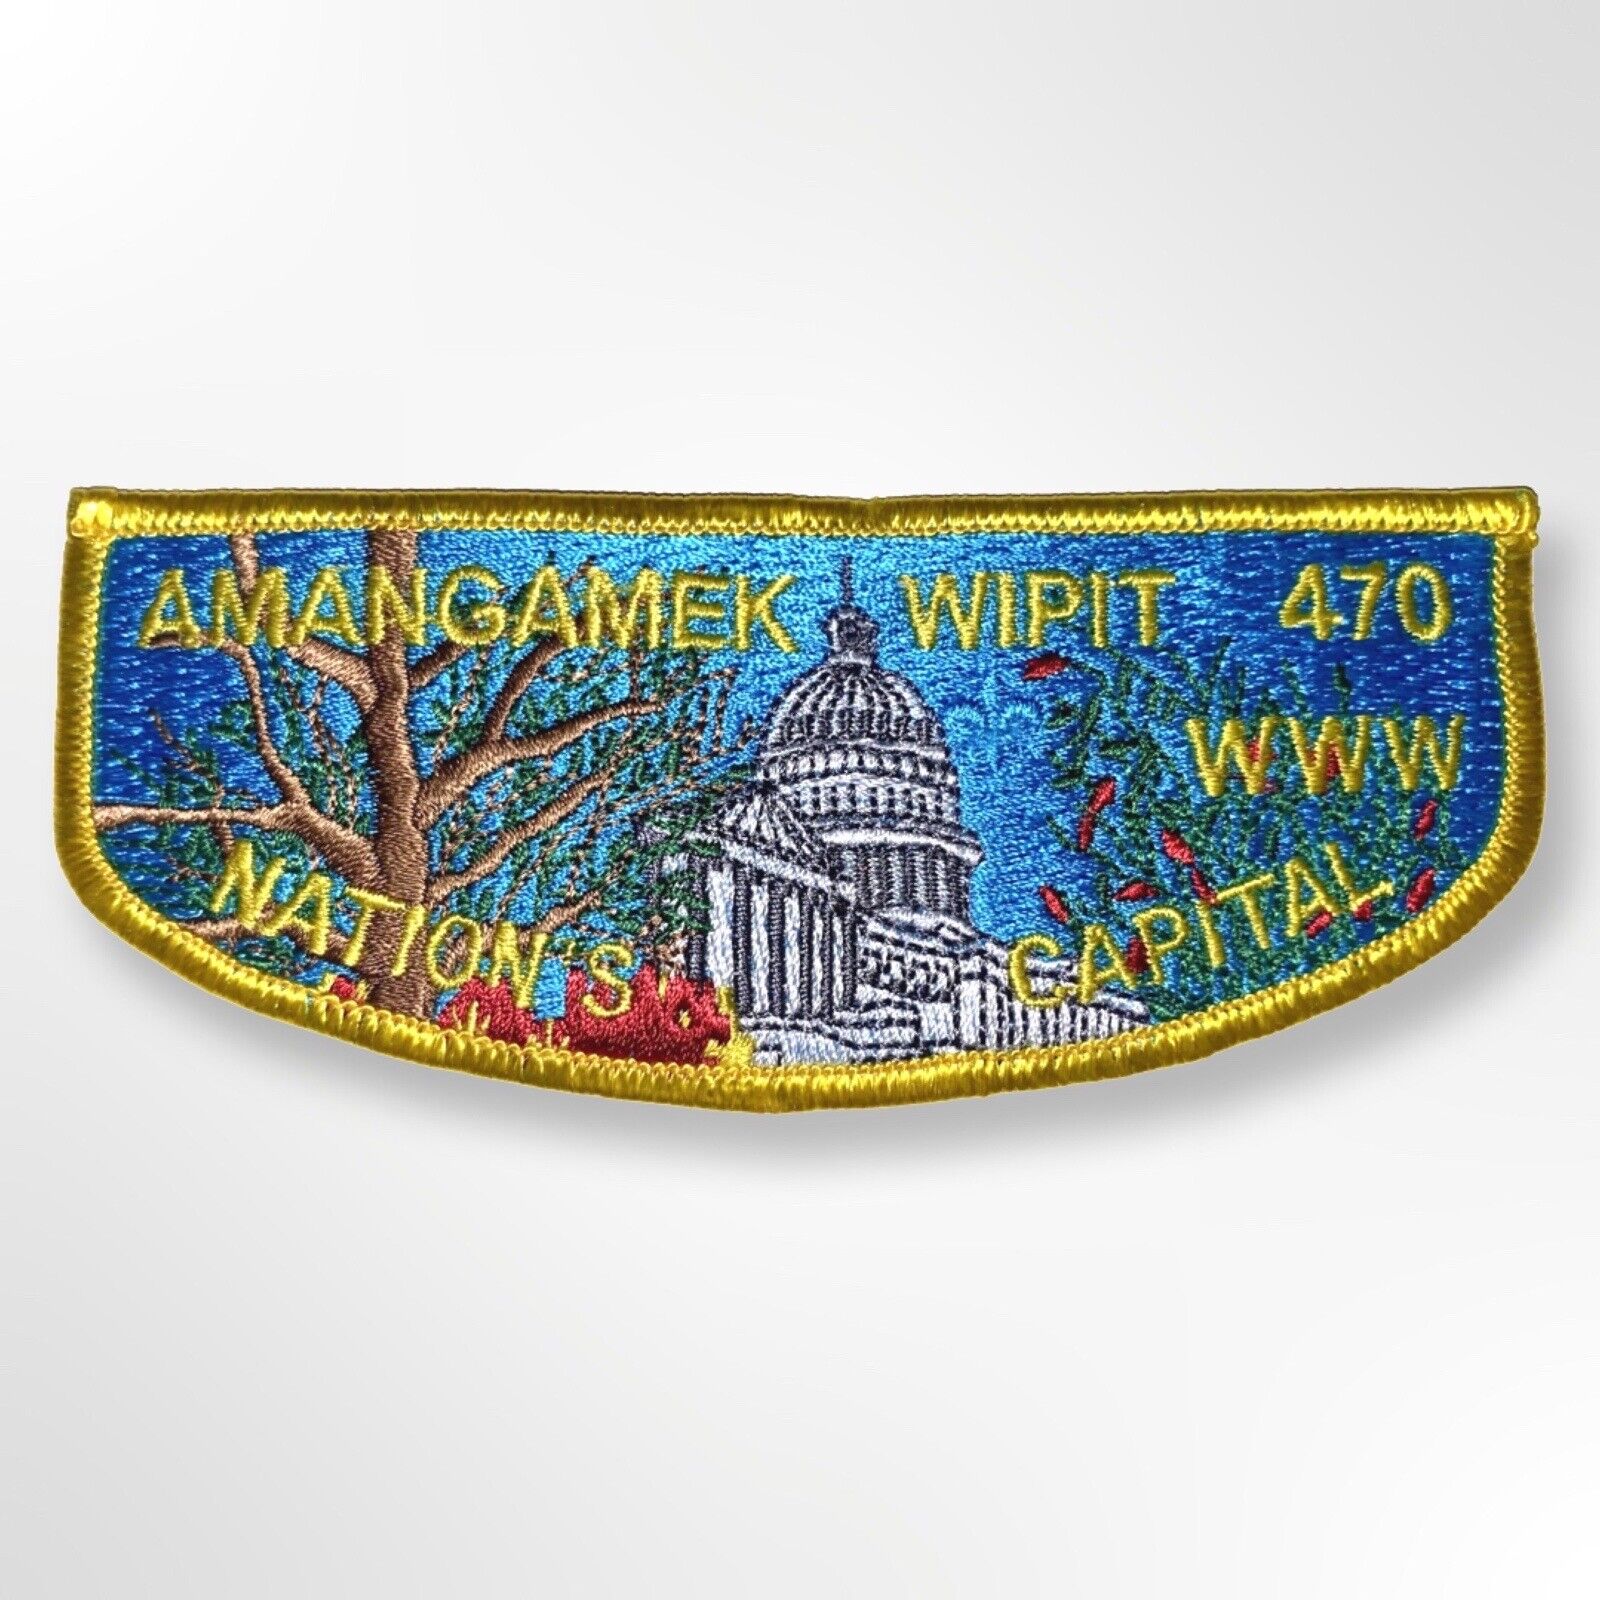 U.S. Capitol Building- Amangamek Wipit, Lodge 470 -OA Flap